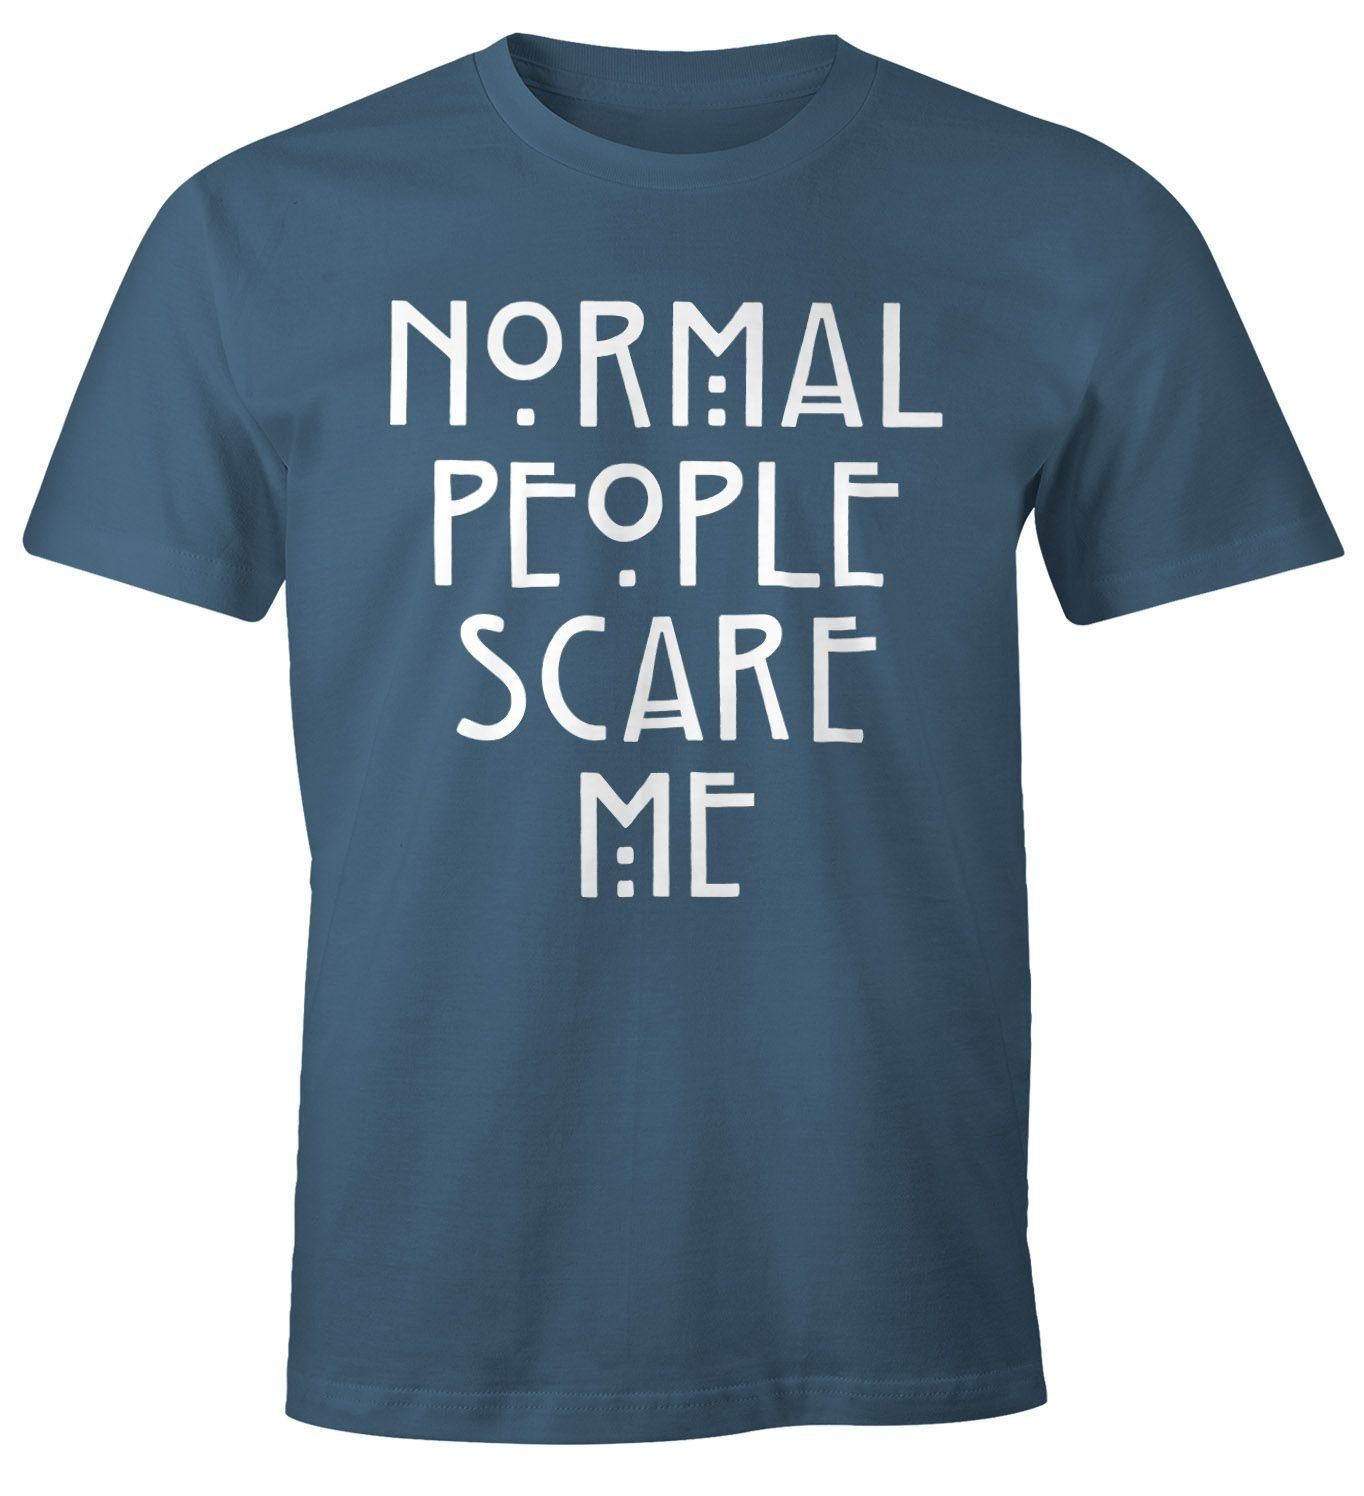 People Fun-Shirt mit Me Scare Normal Moonworks® MoonWorks blau Print-Shirt T-Shirt Herren Print